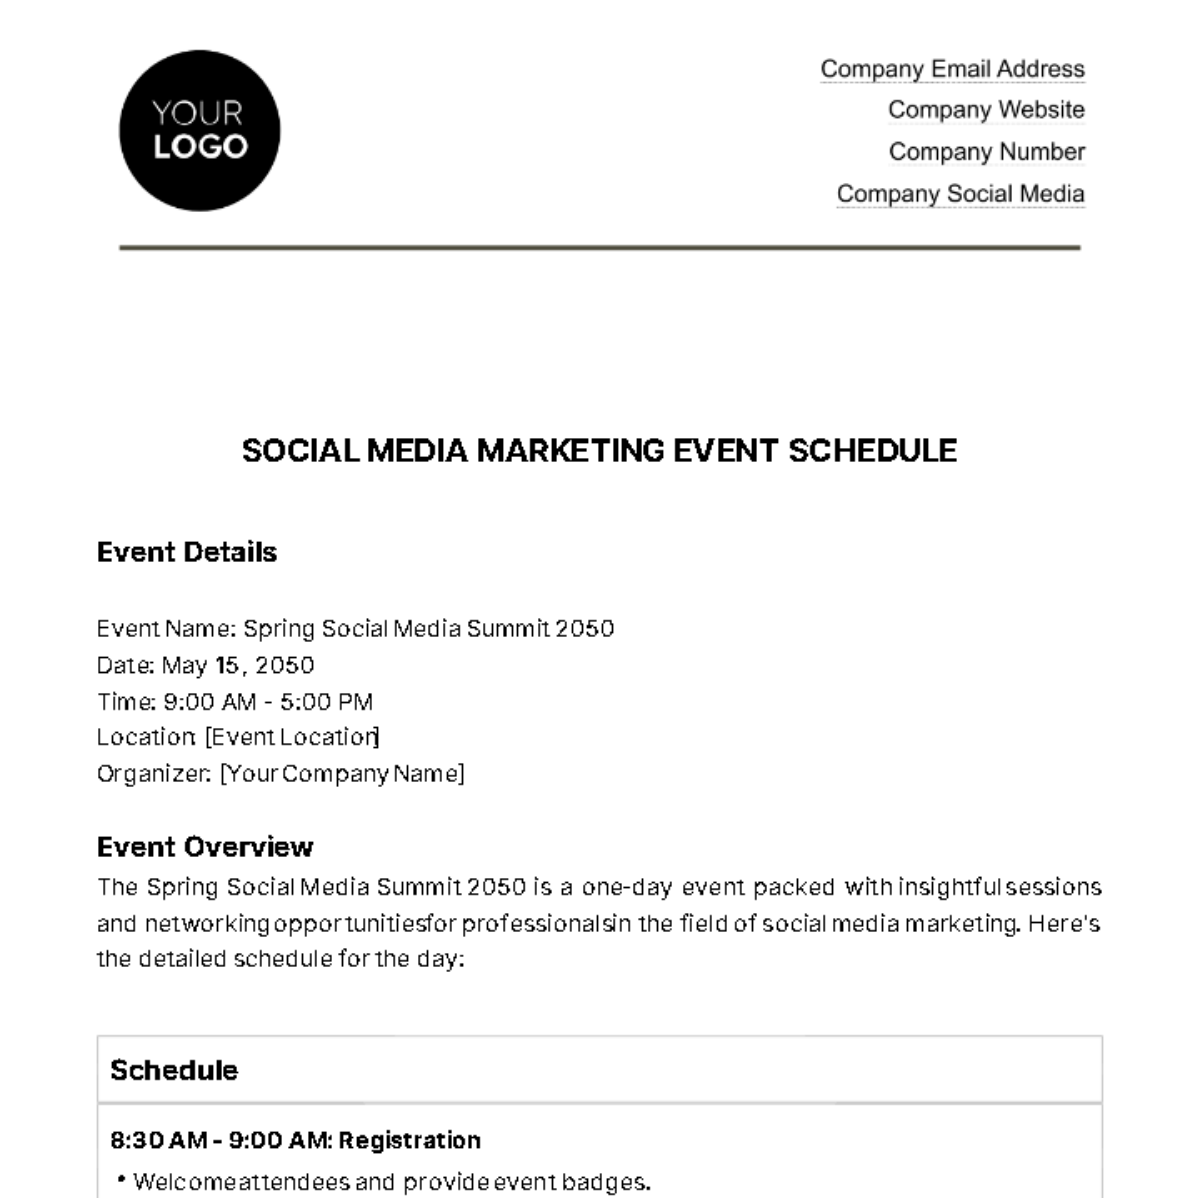 Social Media Marketing Event Schedule Template